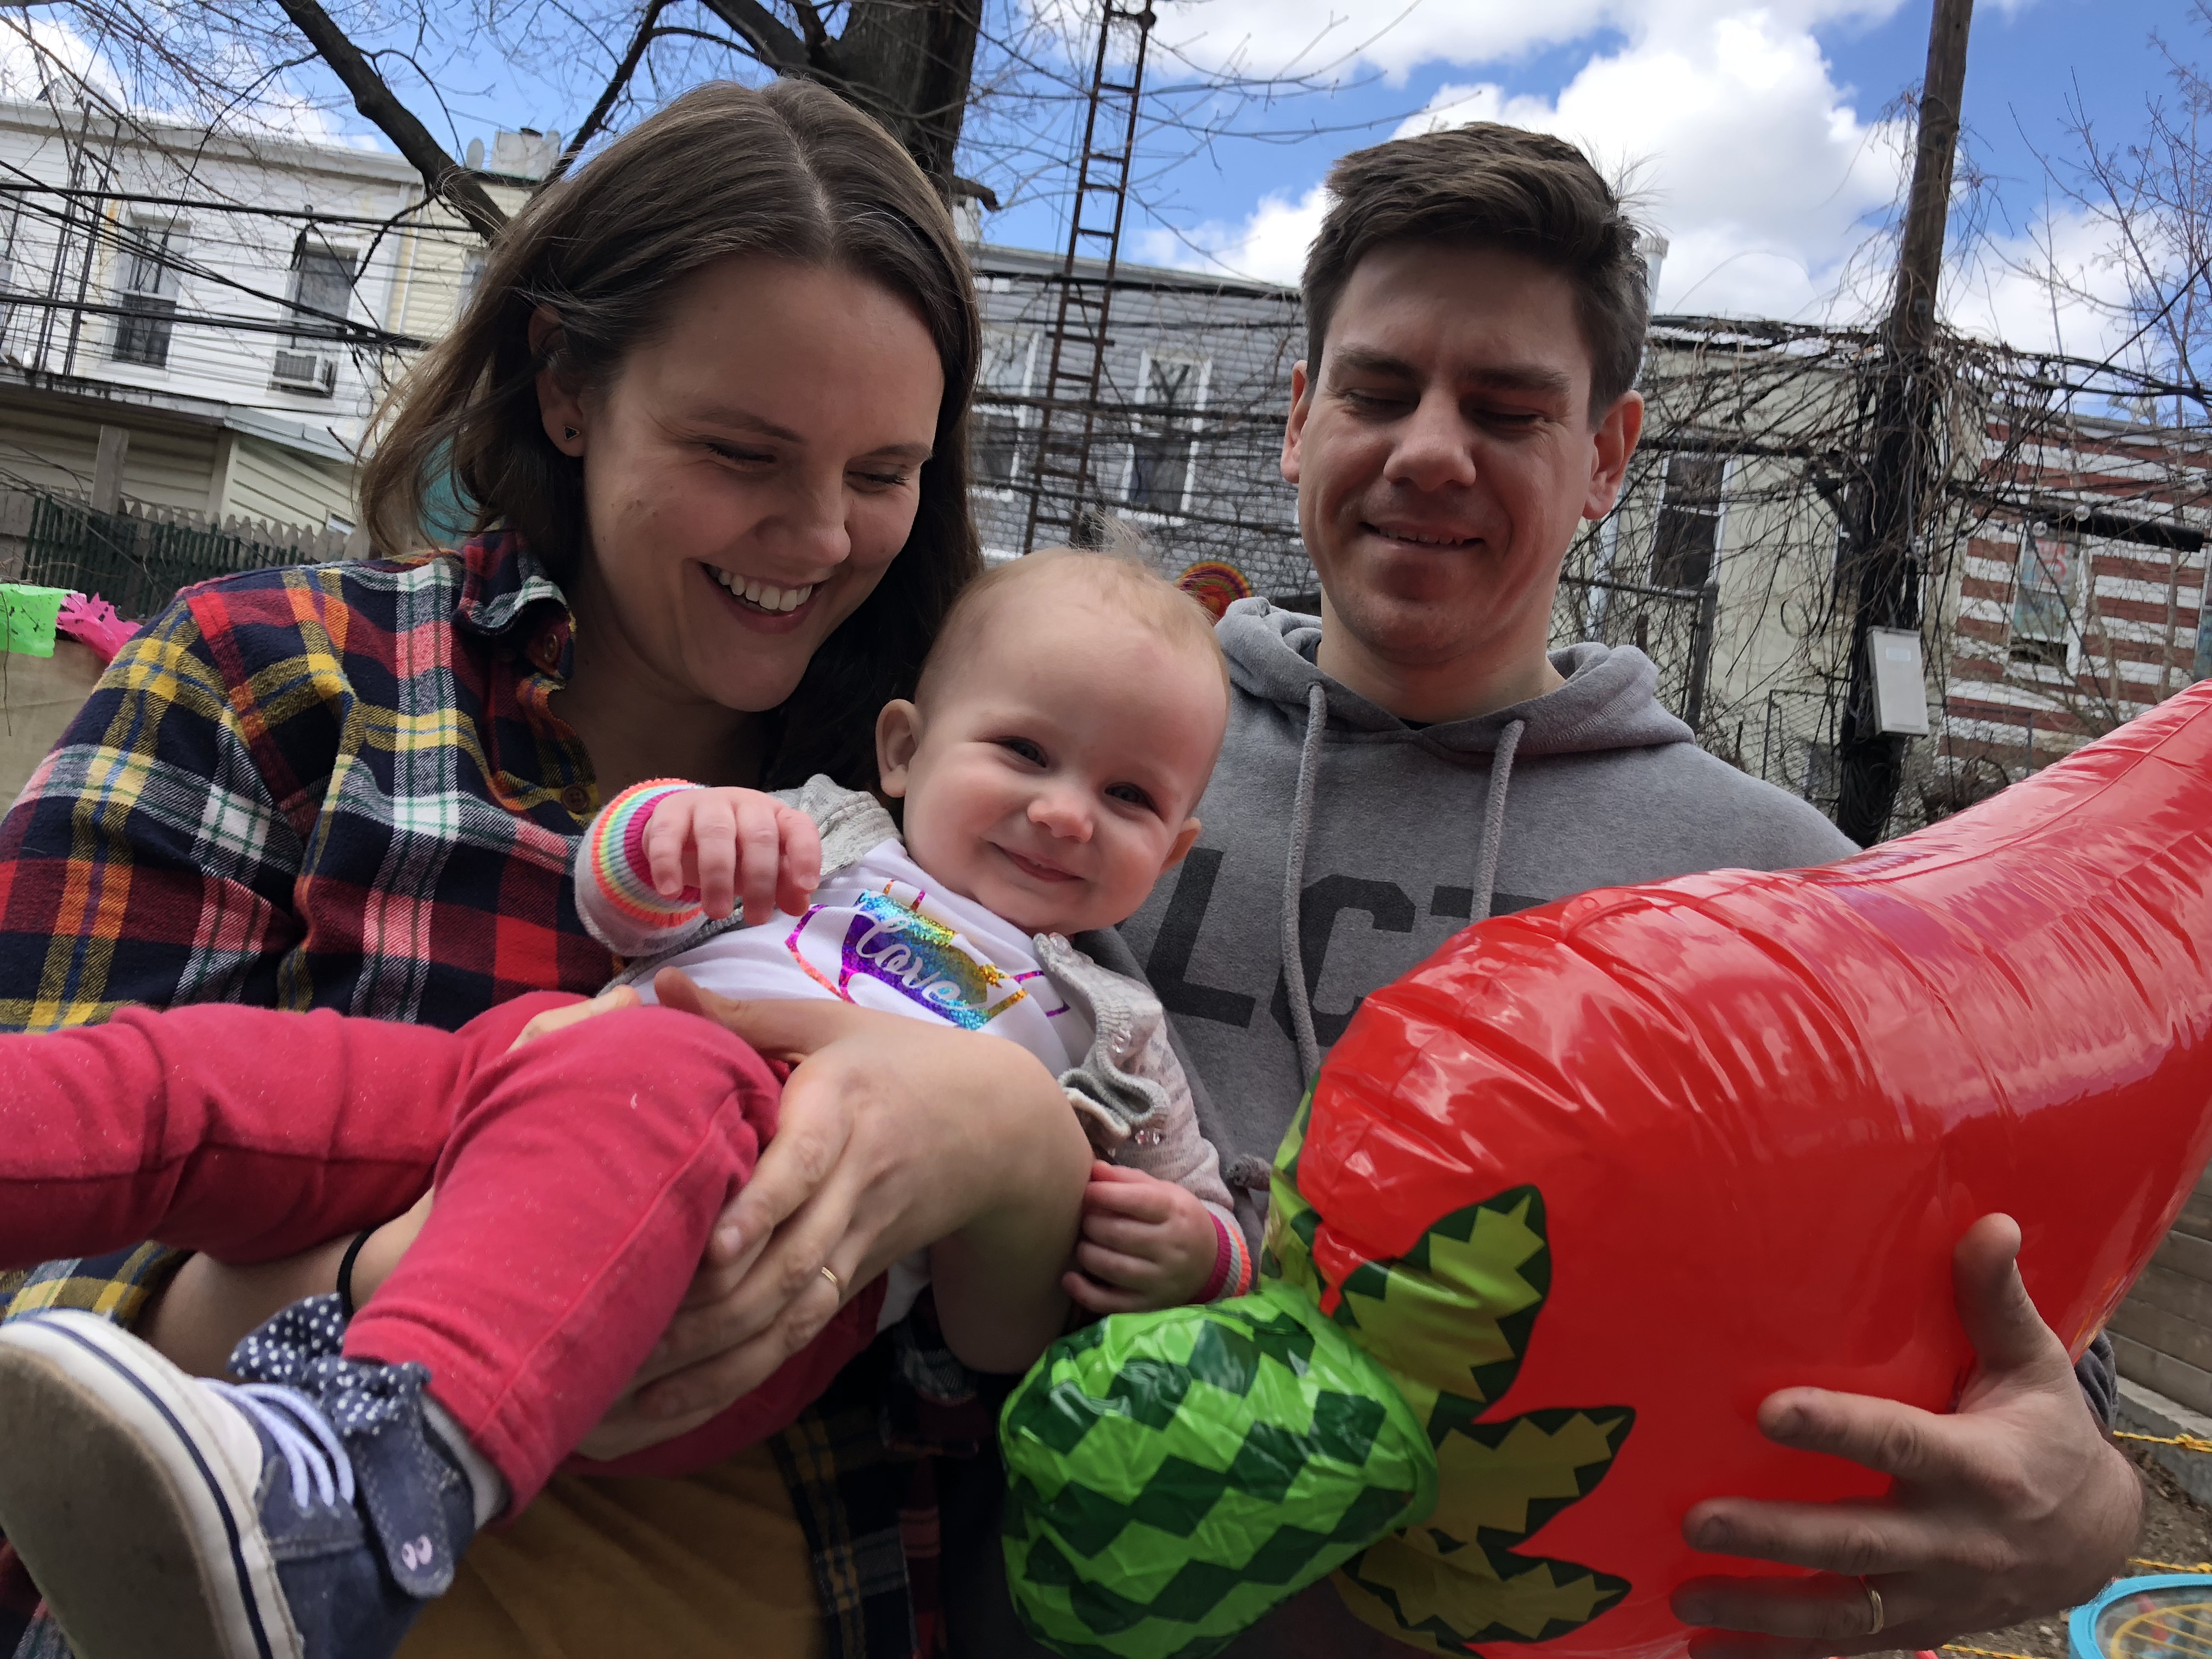 Abortion rights advocate Erika Christensen and her husband, Garin Marschall, hold their 1-year-old daughter Pepper. (Courtesy of Erika Christensen)